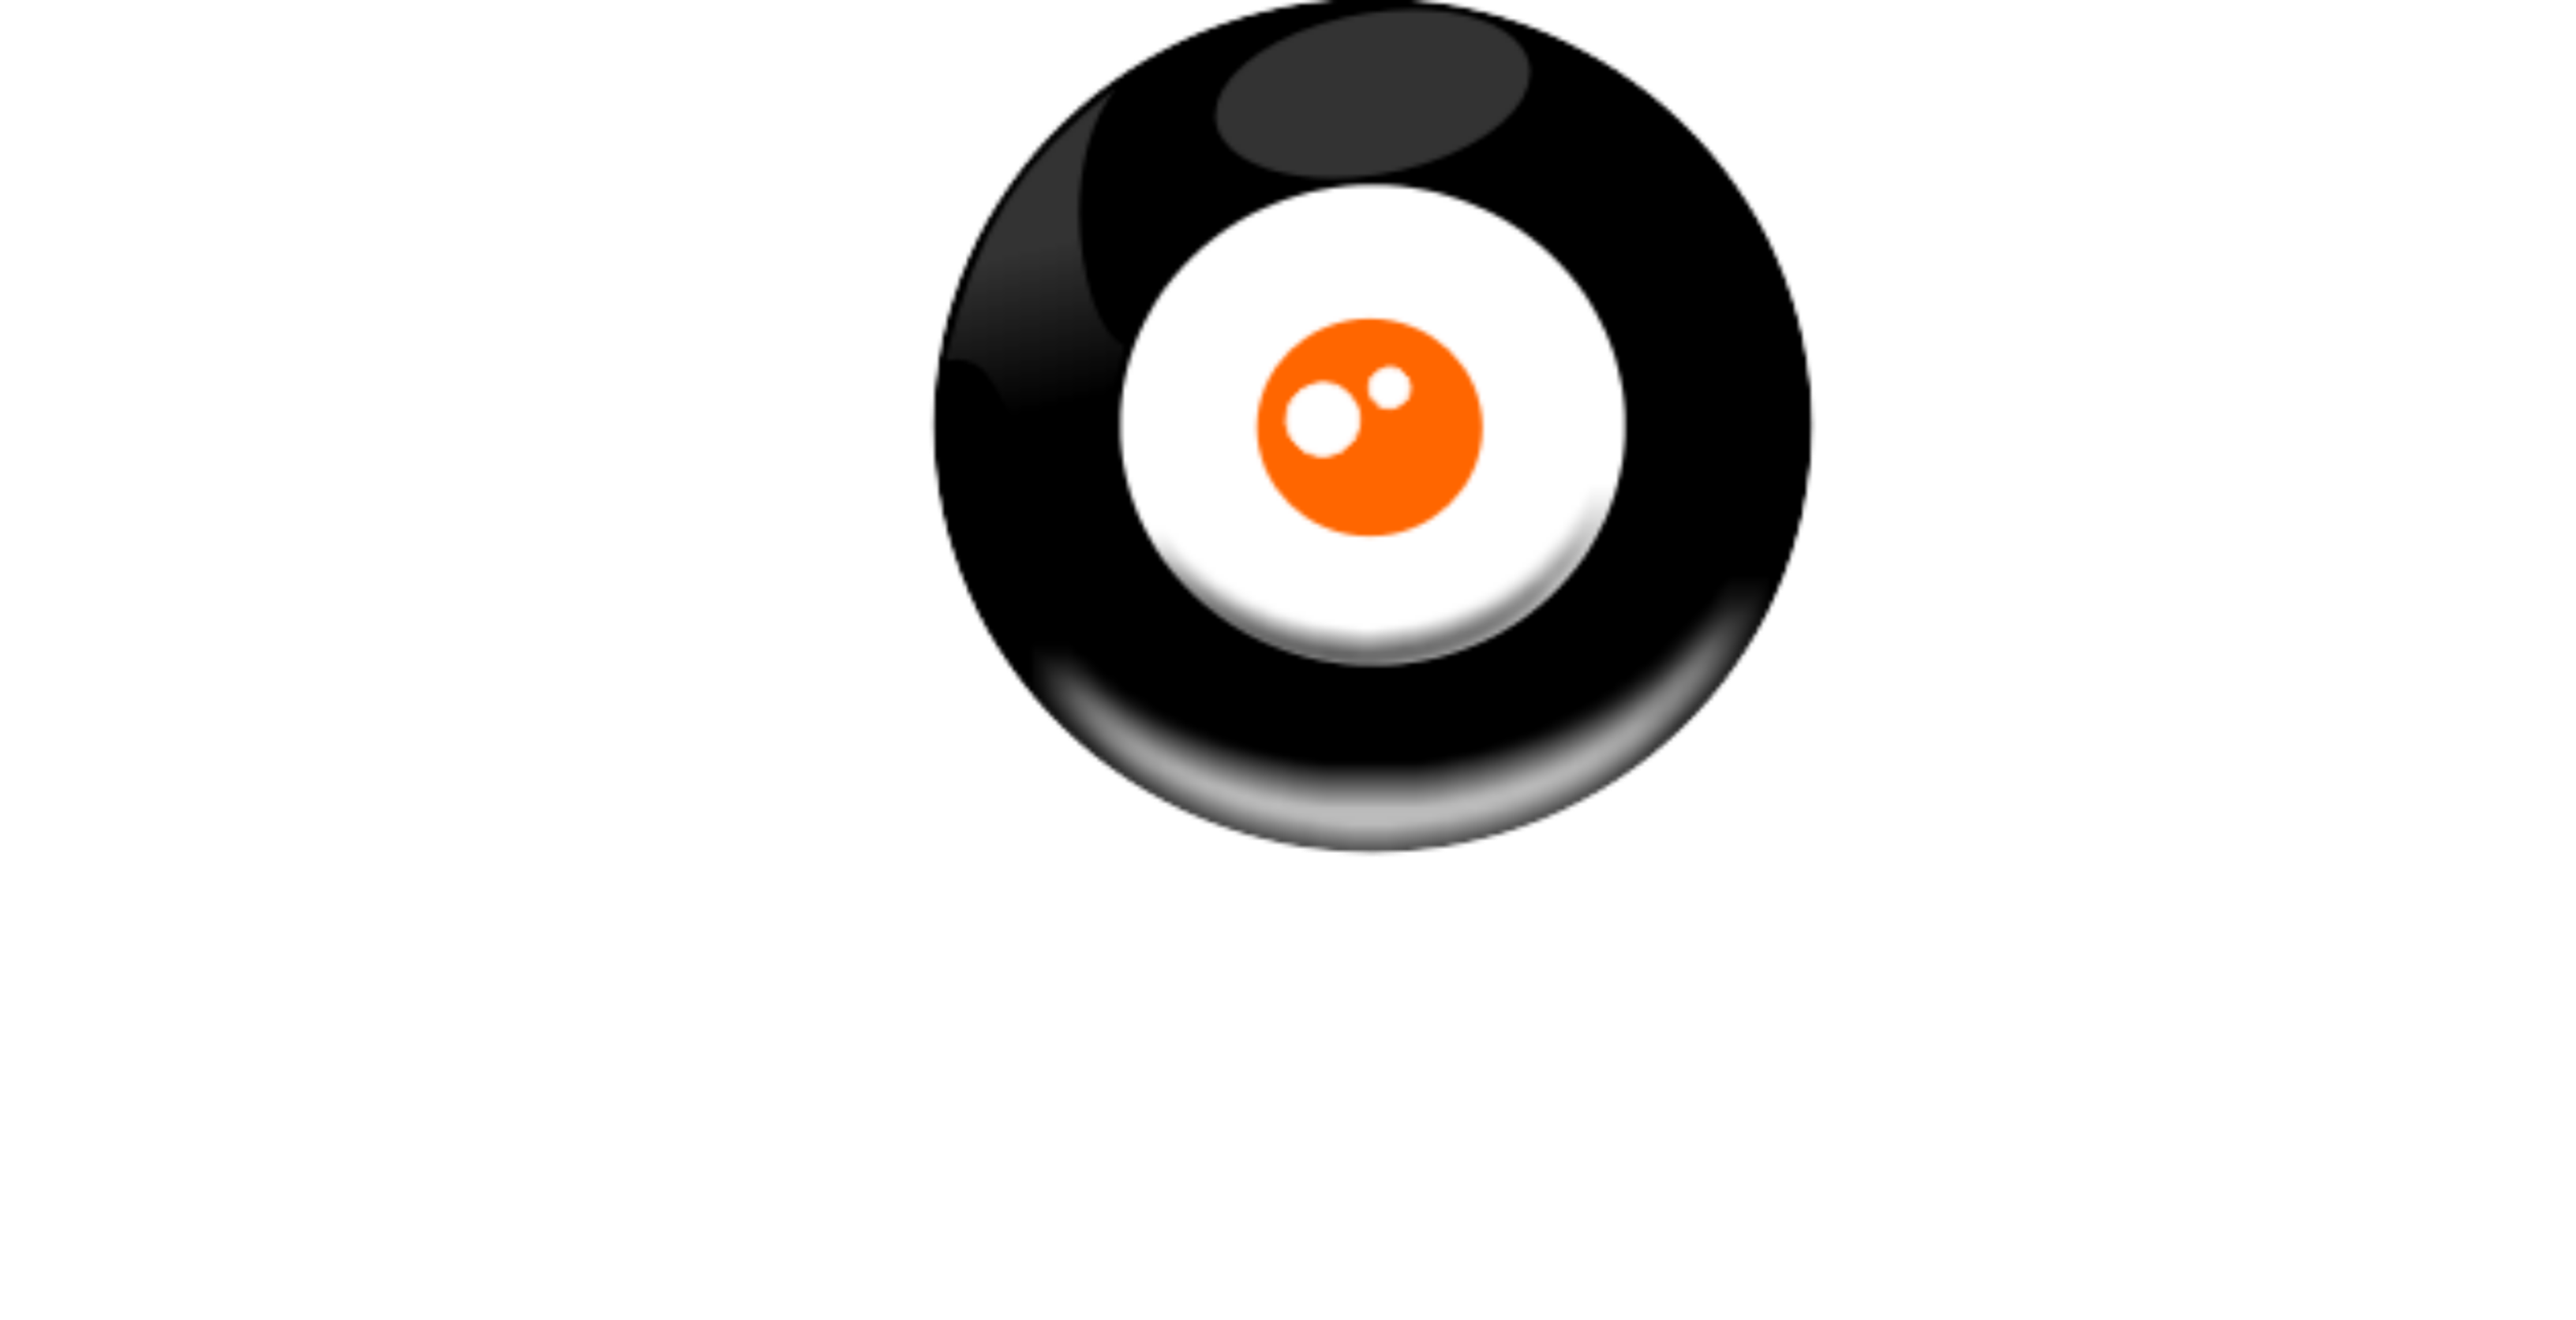 CentrePort Ministries International